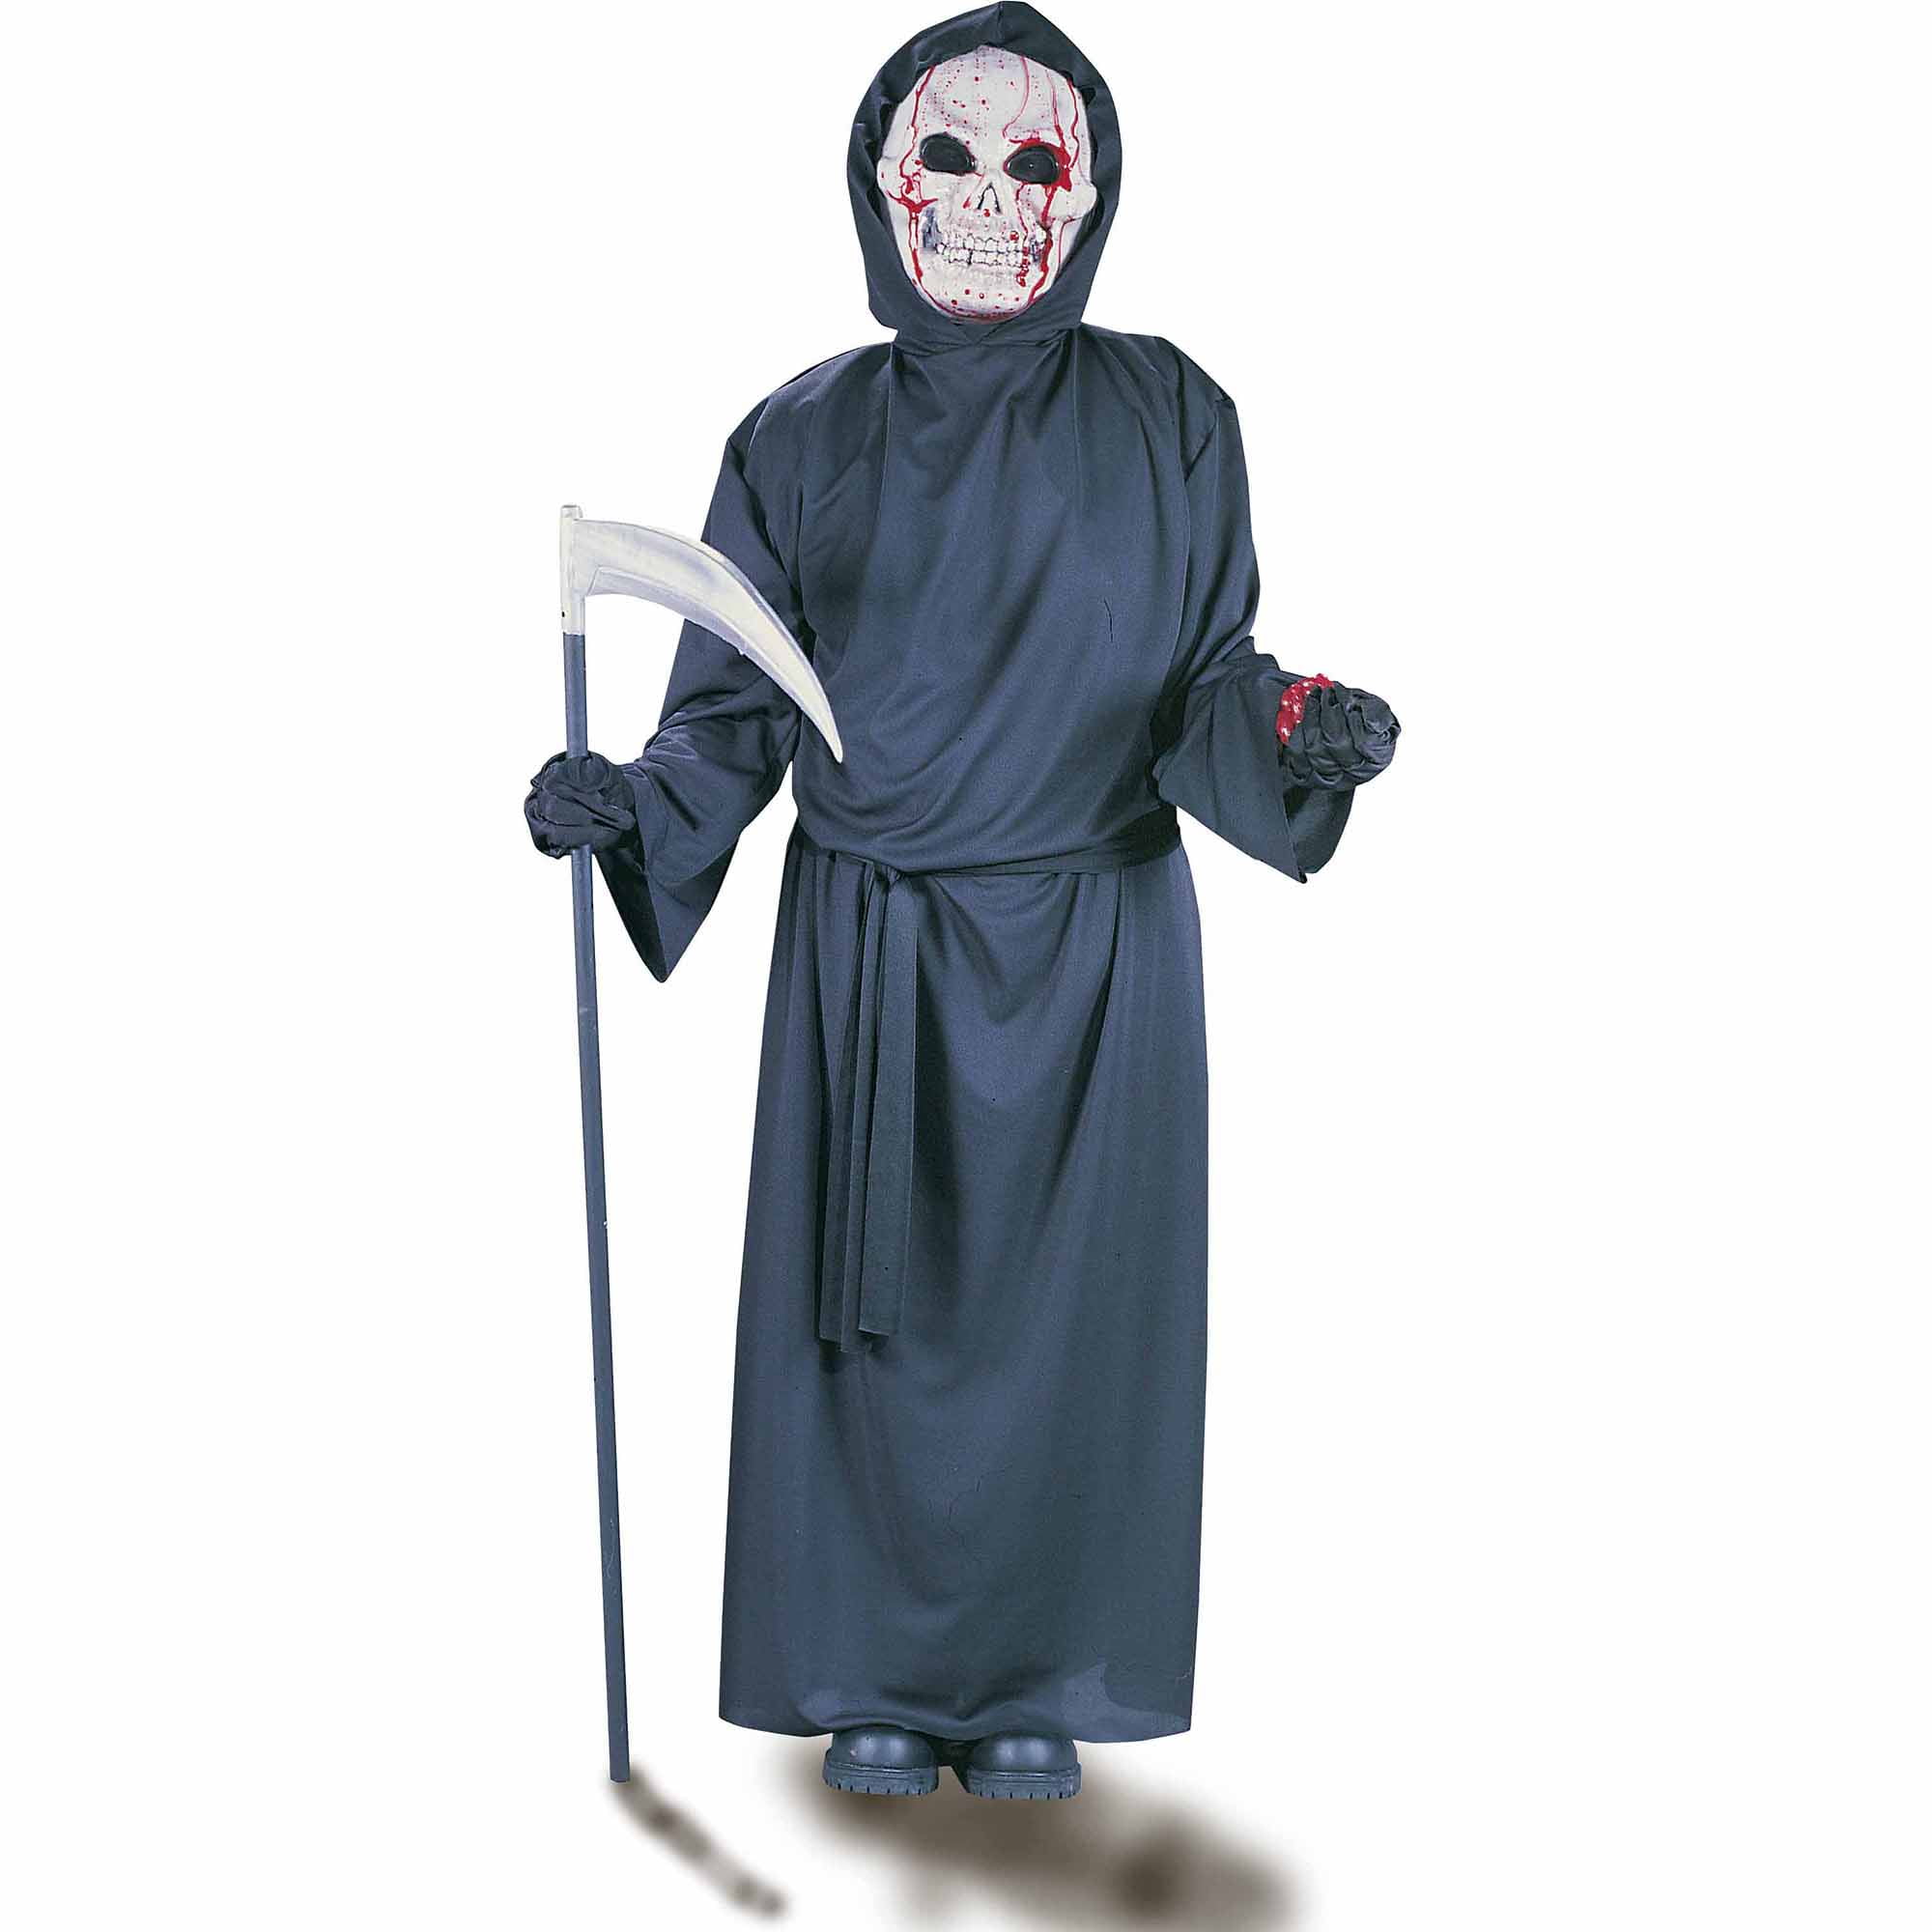 Details about   MONIKA FASHION WORLD Skeleton Costume for Boys Kids Light up Halloween Size M...